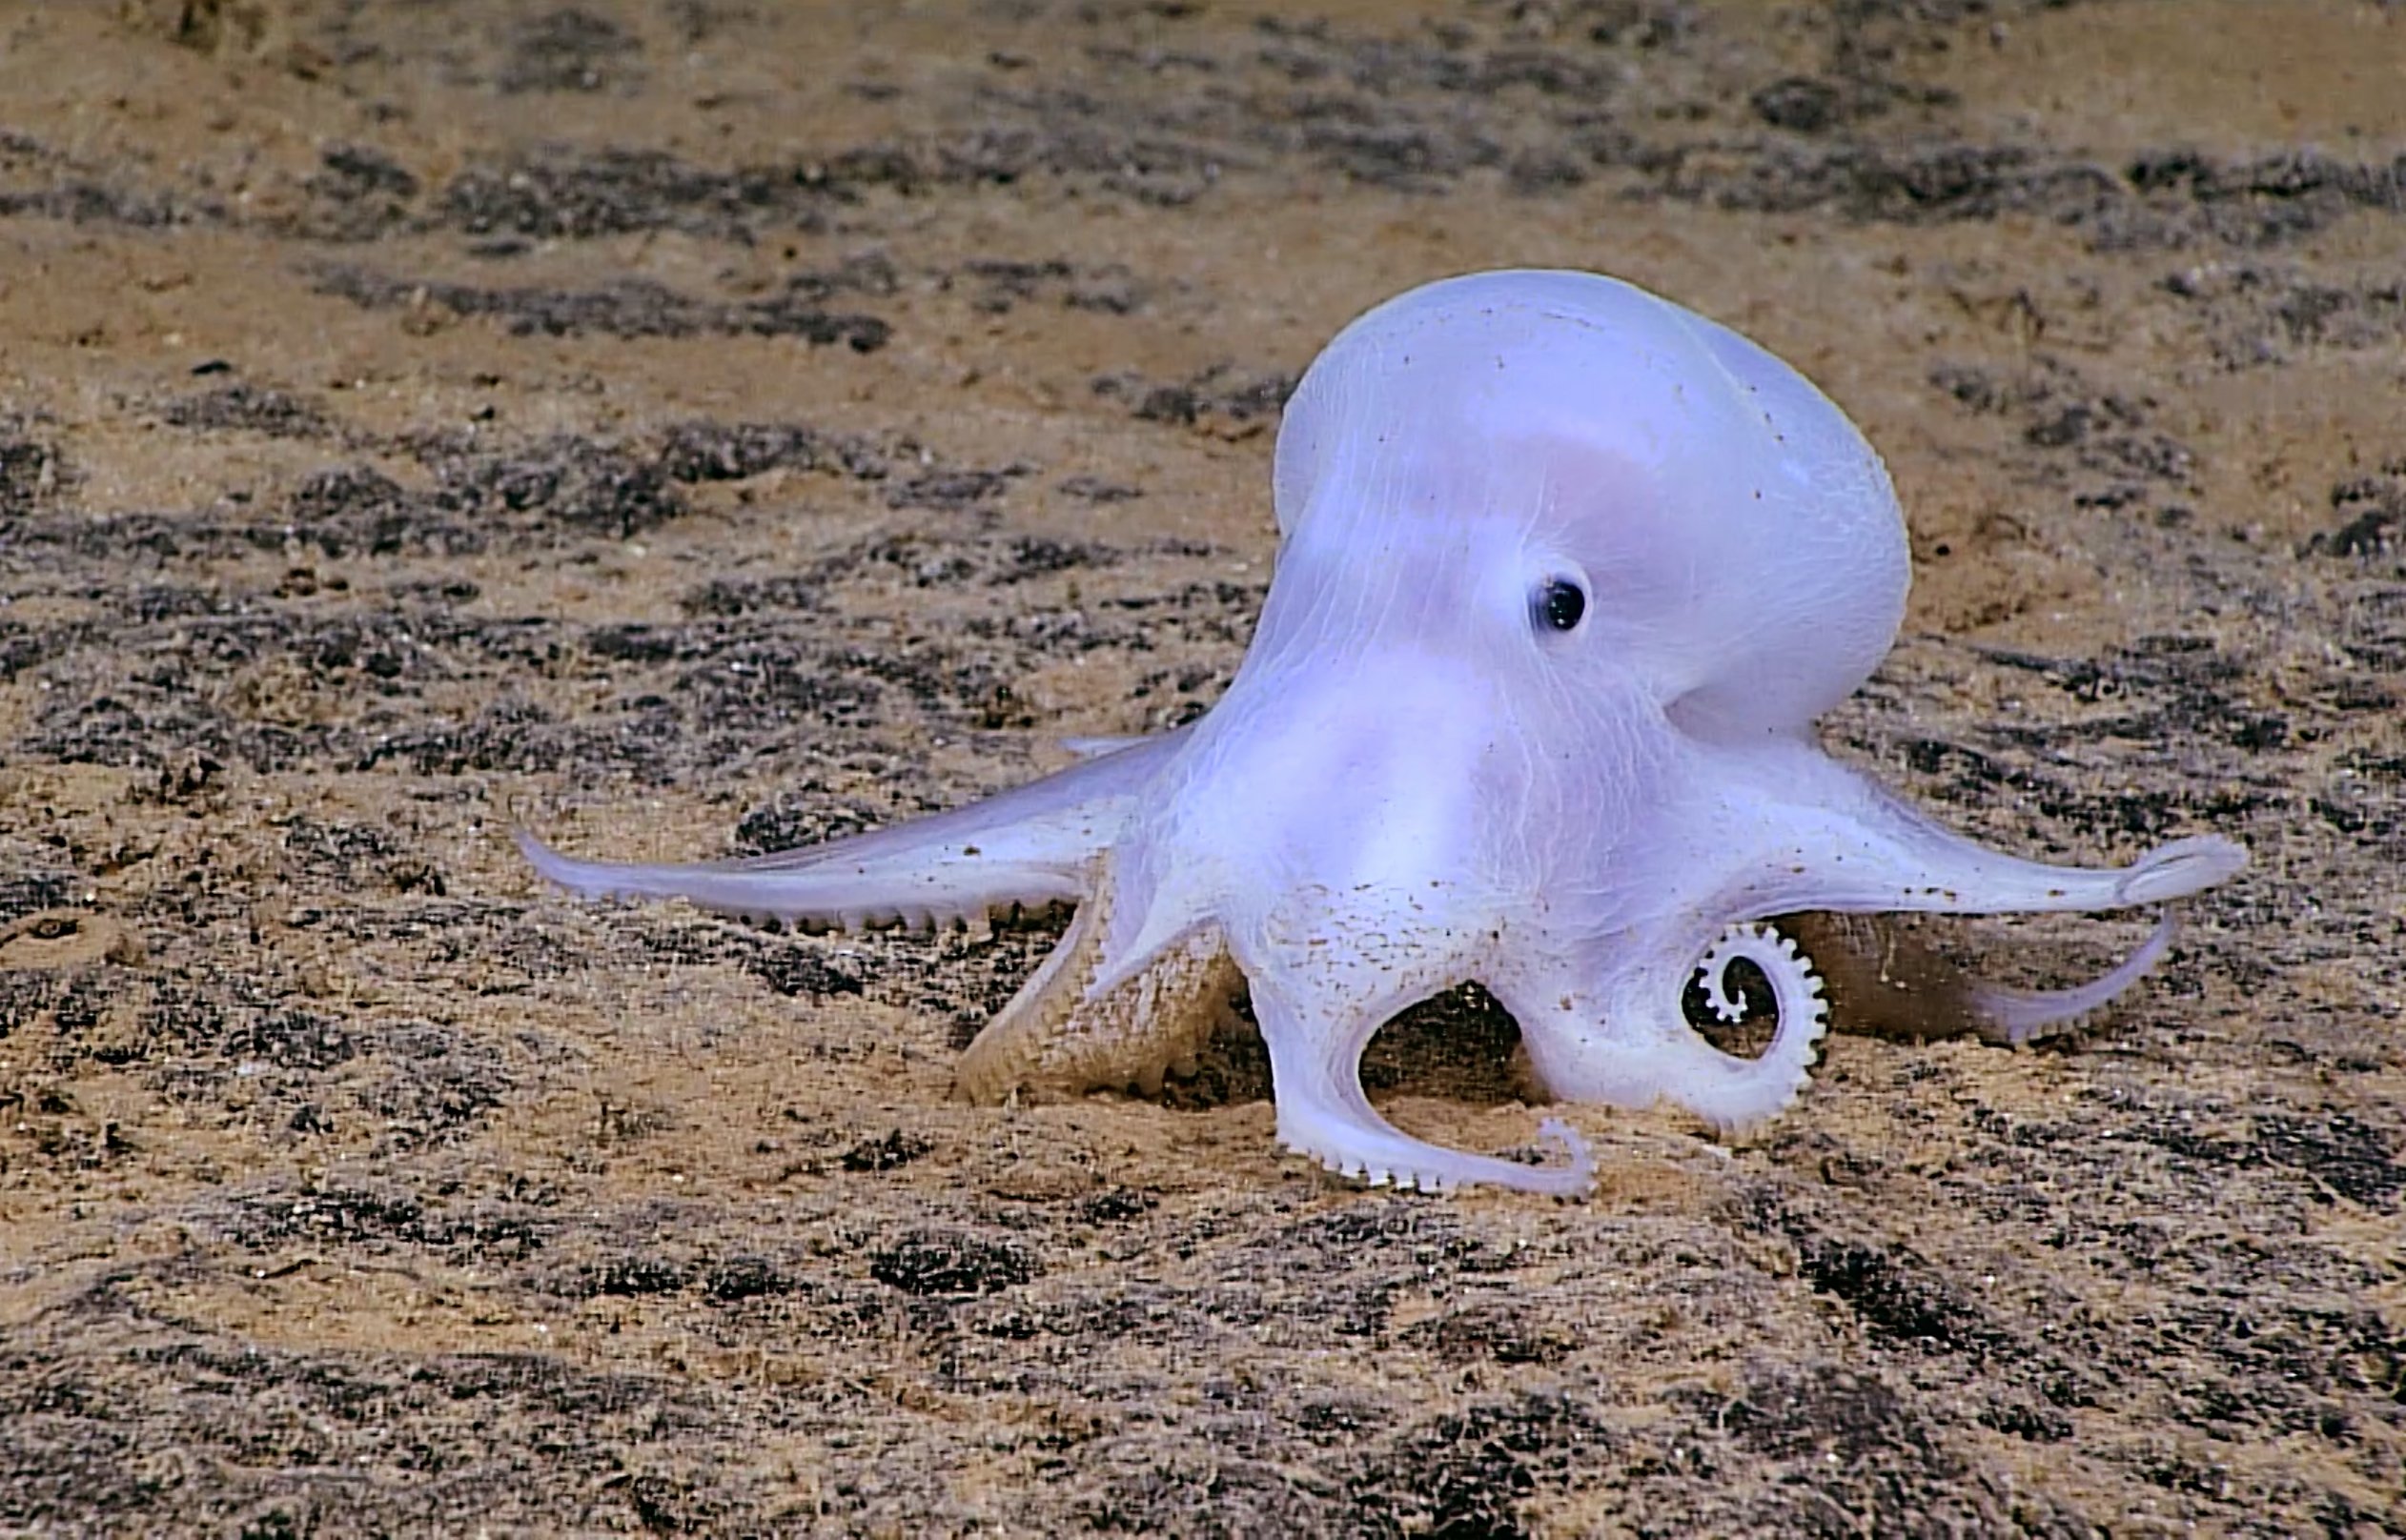 Море живое существо. Осьминог Каспер. Каспер Призрачный осьминог. Осьминог Думбо. Осьминог Дамбо.